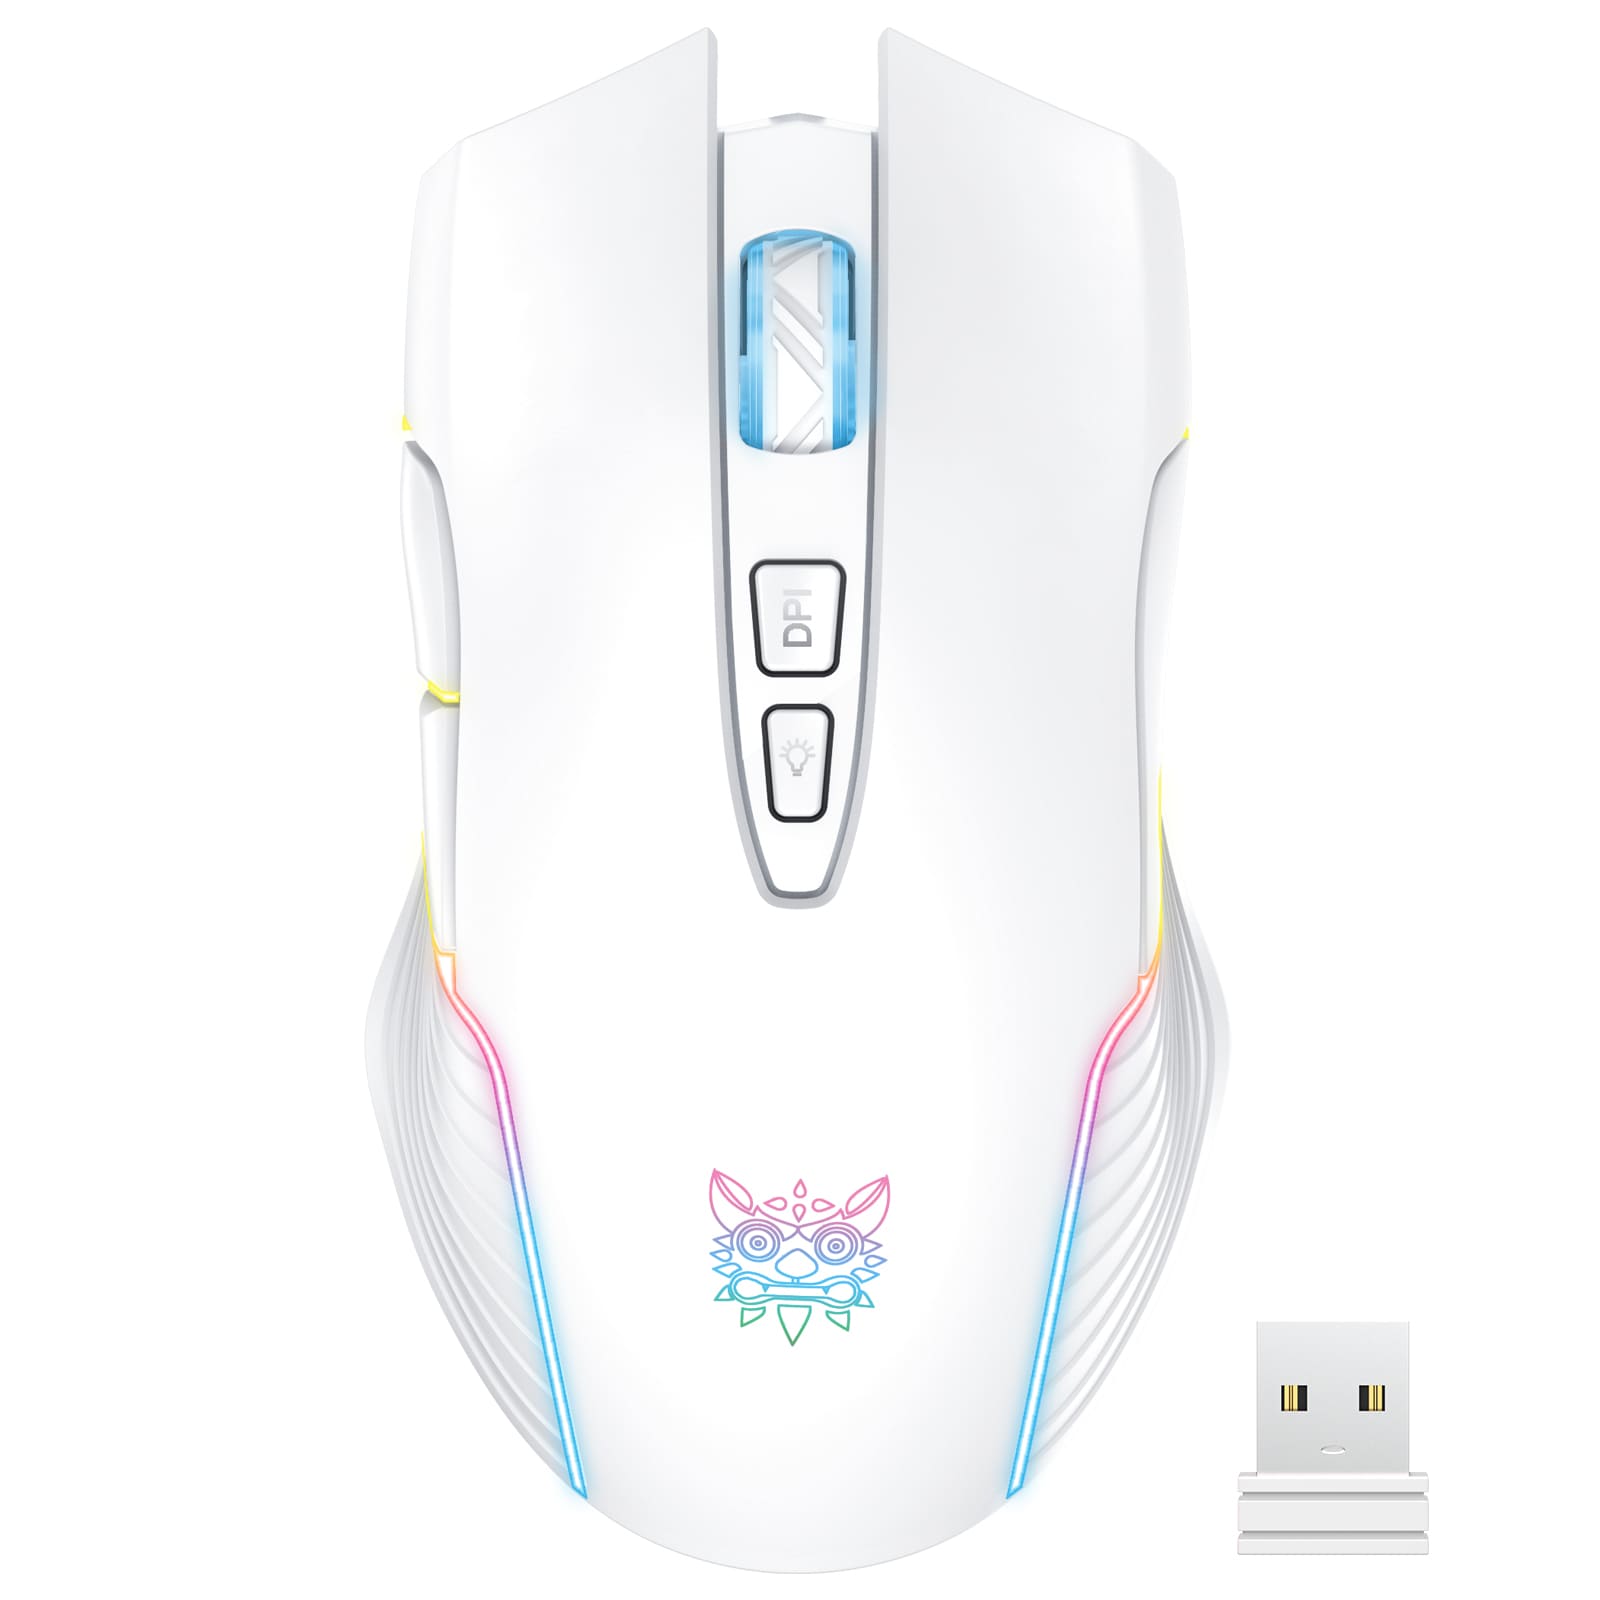 ONIKUMA CW905 3600 DPI Wireless Gaming Mouse